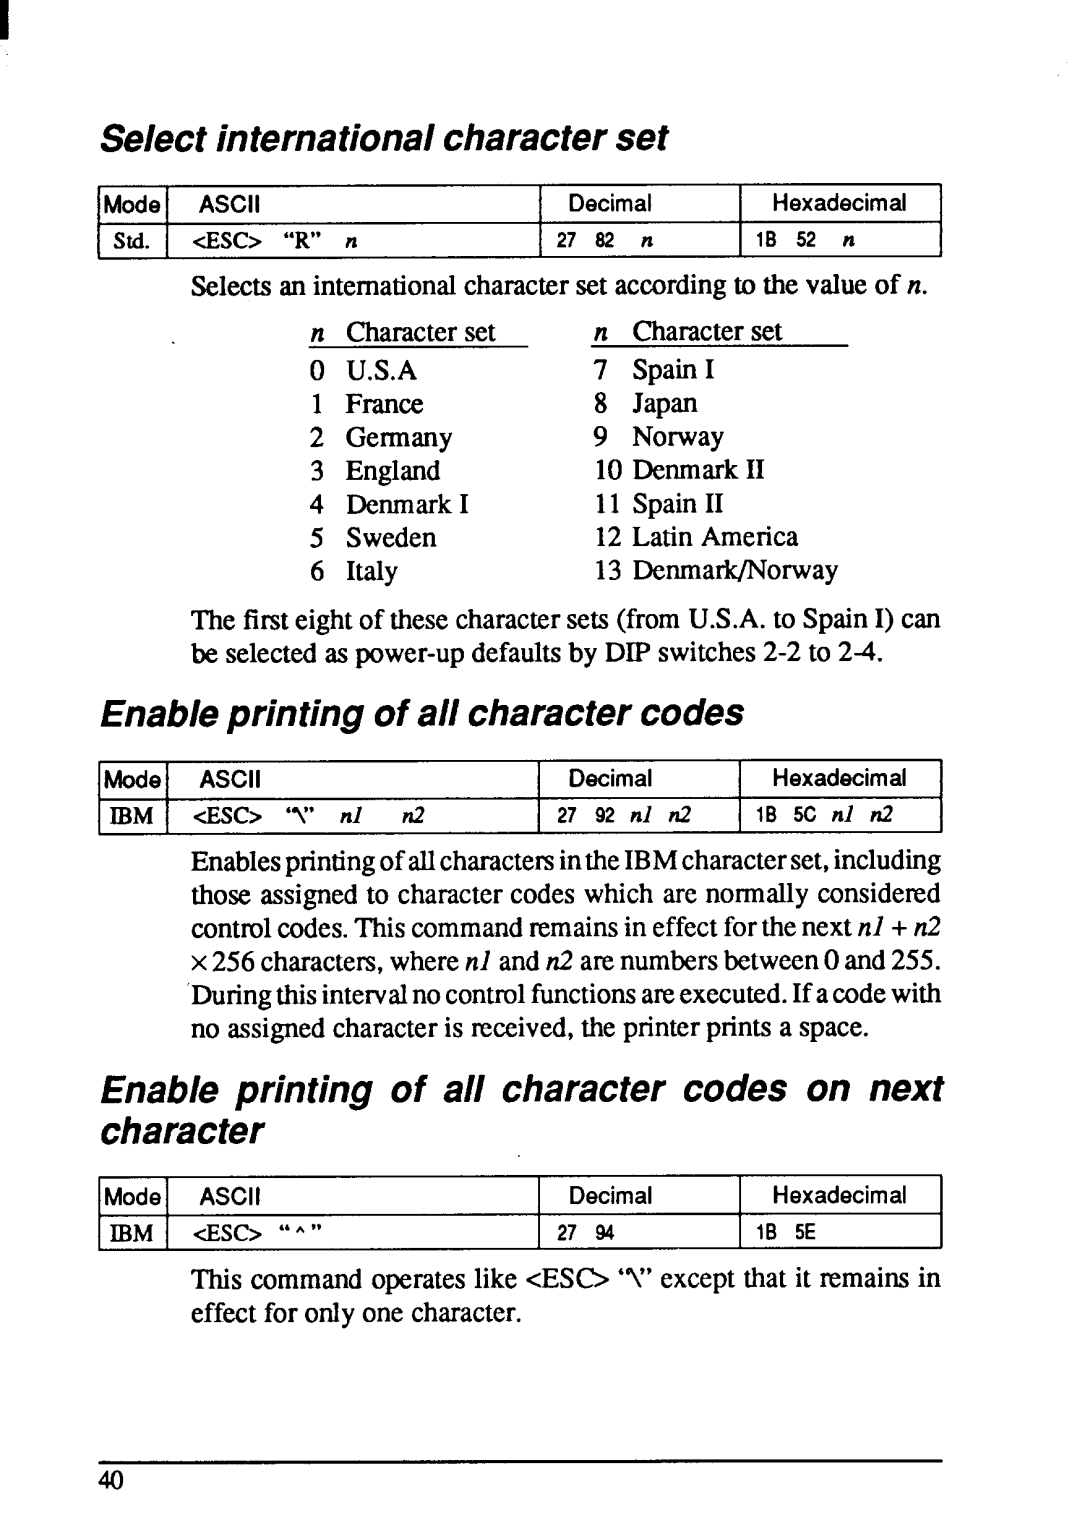 Star Micronics NX-1001 manual Selectinternationalcharacterset, Enable printing of all character codes on next character 